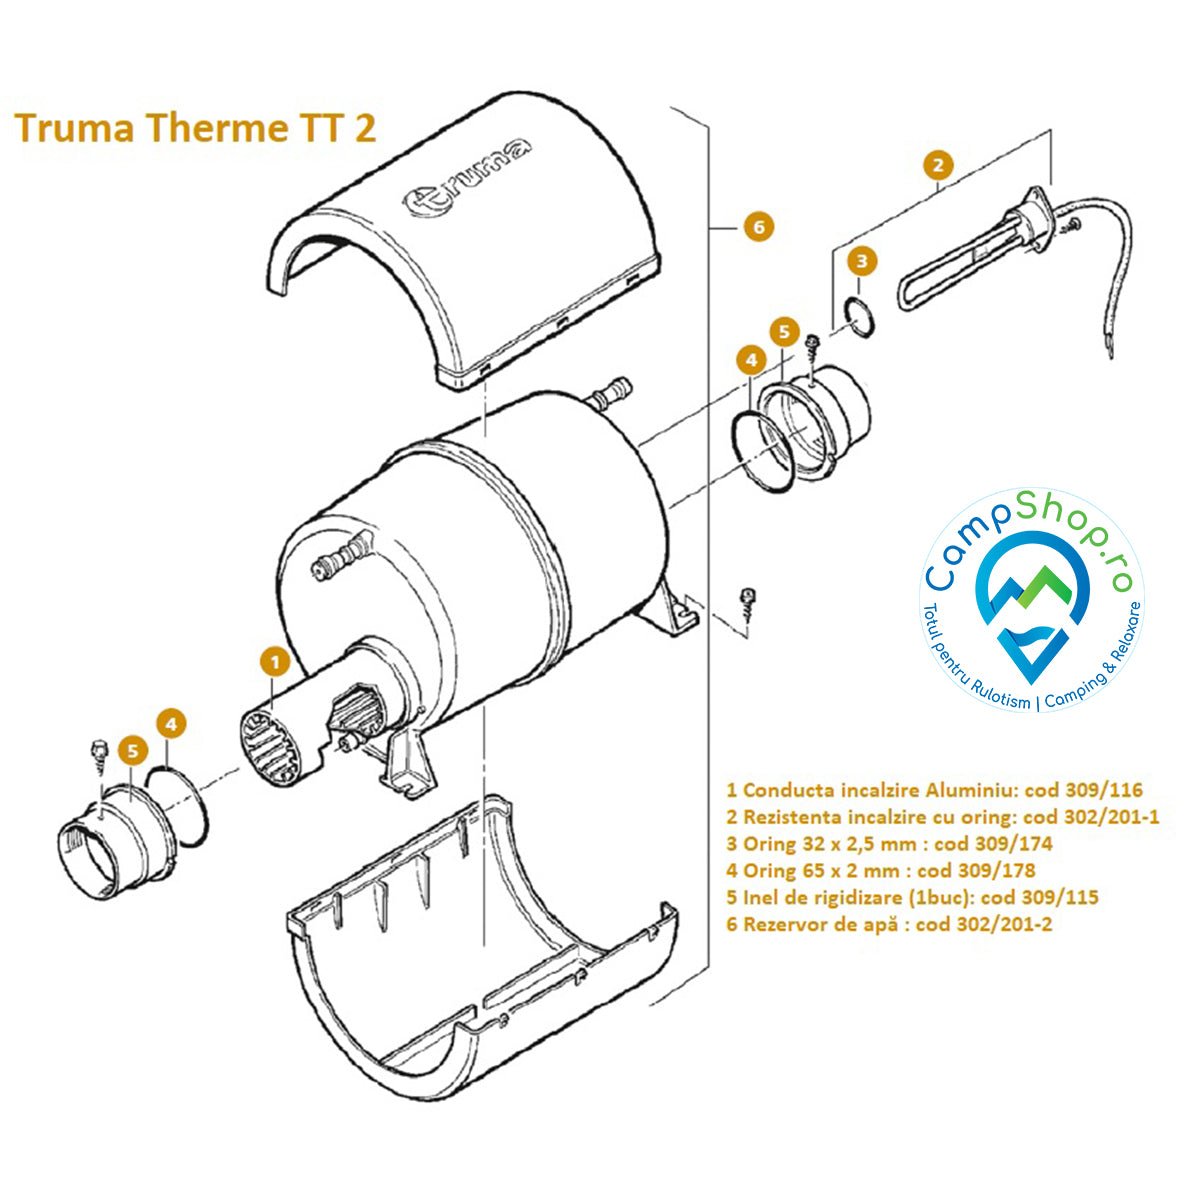 Oring 65 x 2 mm pentru boiler-ul TRUMA Therme TT2 - campshop.ro